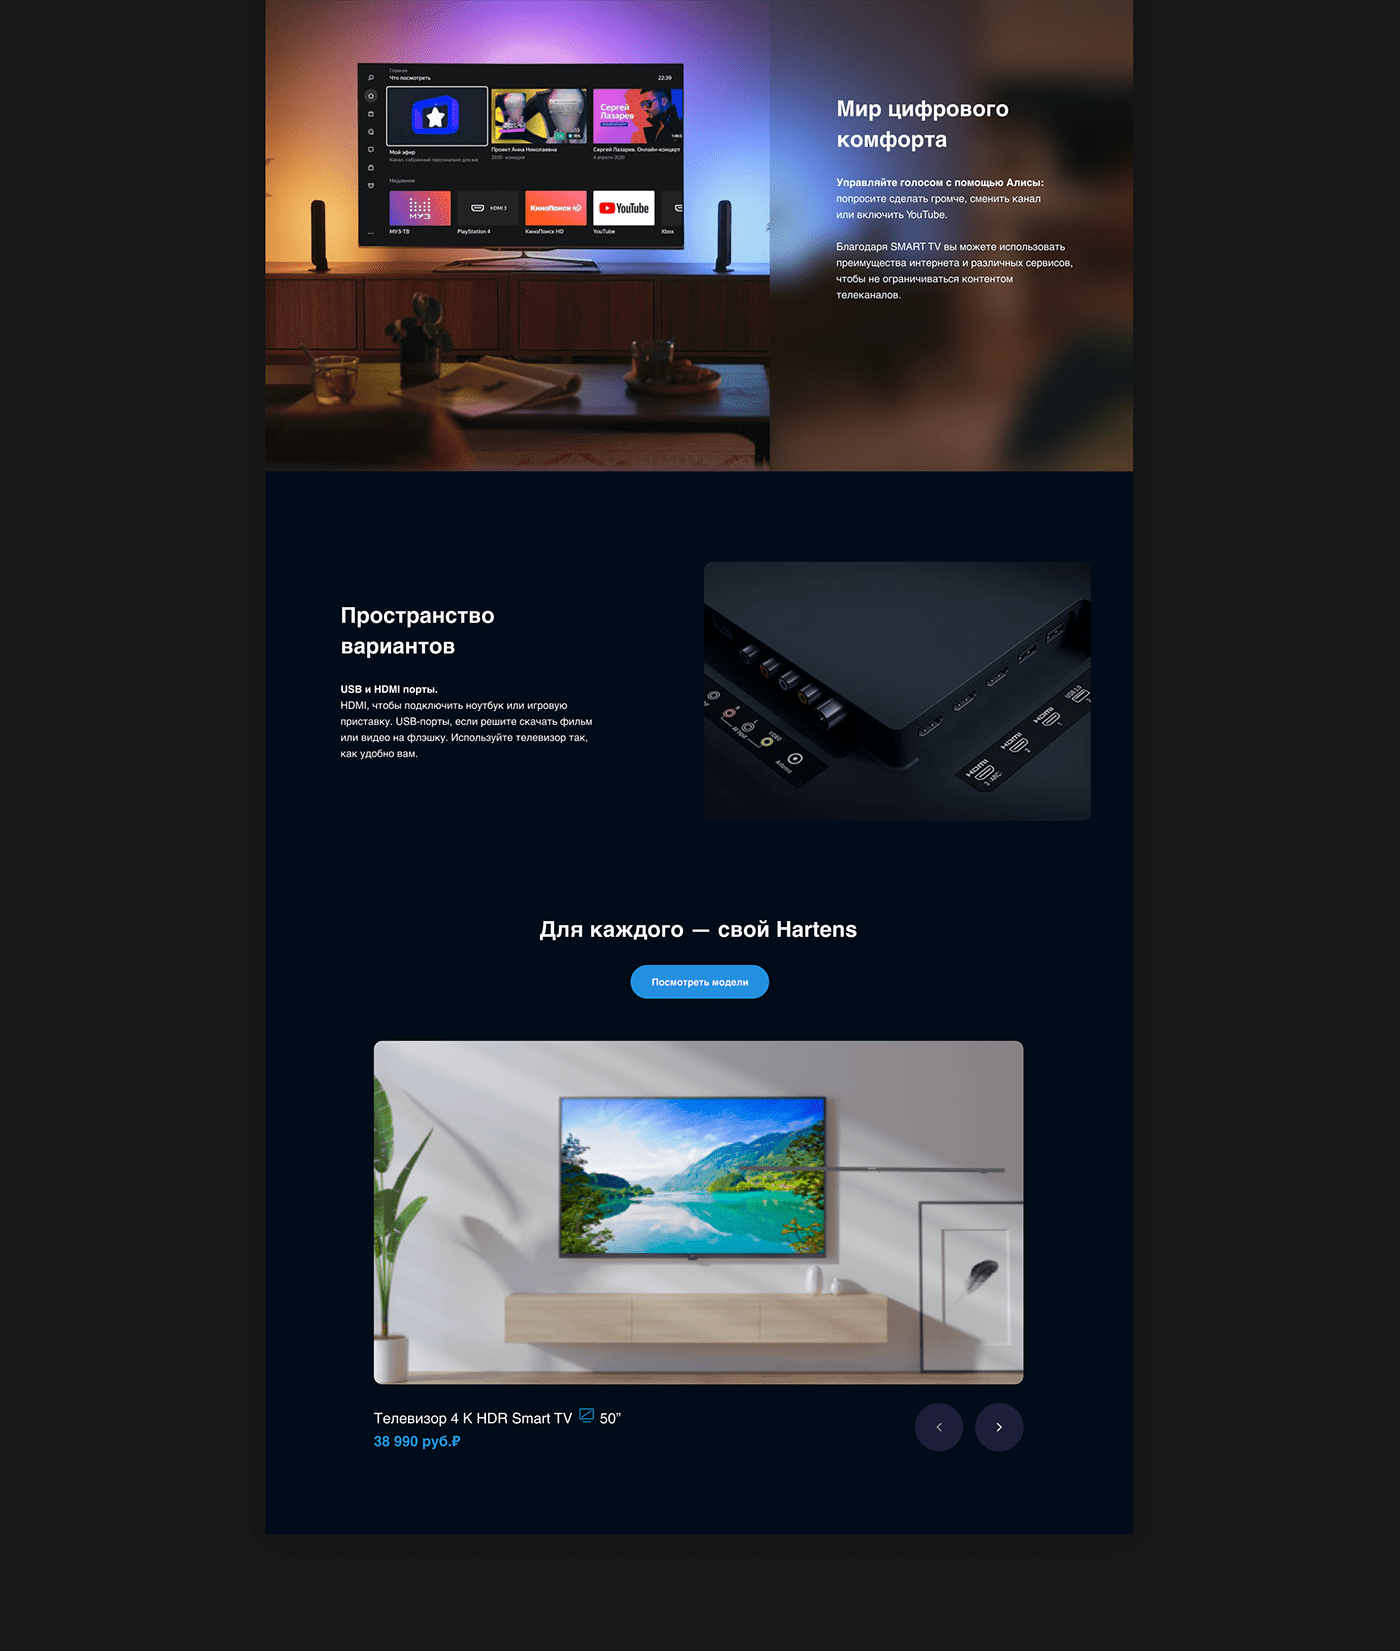 landing page serenity UI/UX Web Design  Website